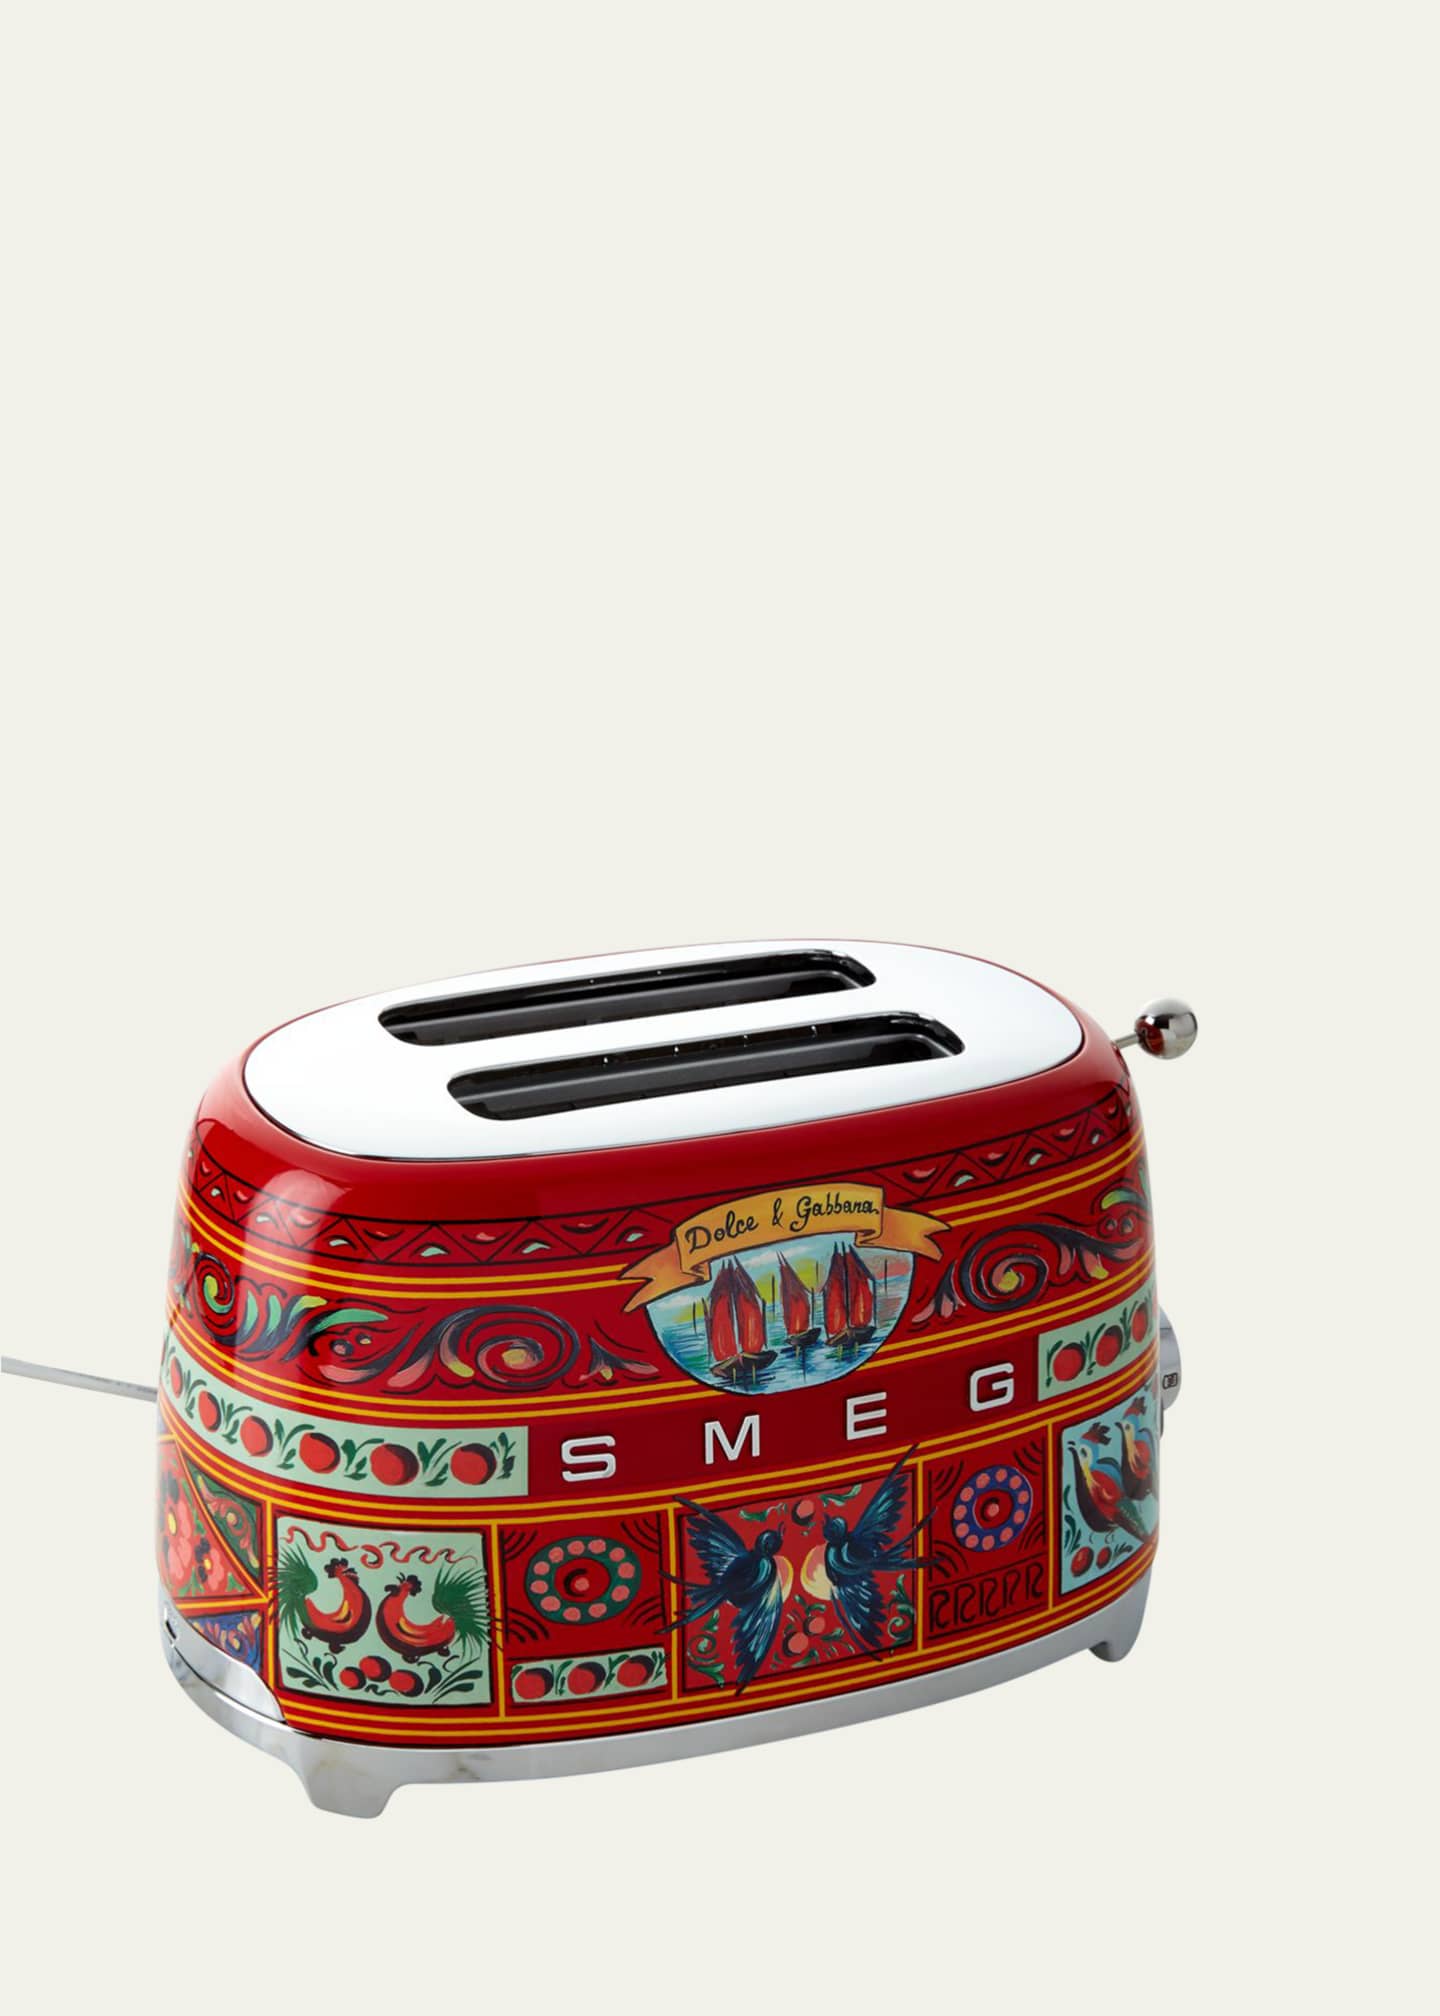 Smeg Dolce Gabbana x SMEG Sicily Is My Love Toaster Image 1 of 4